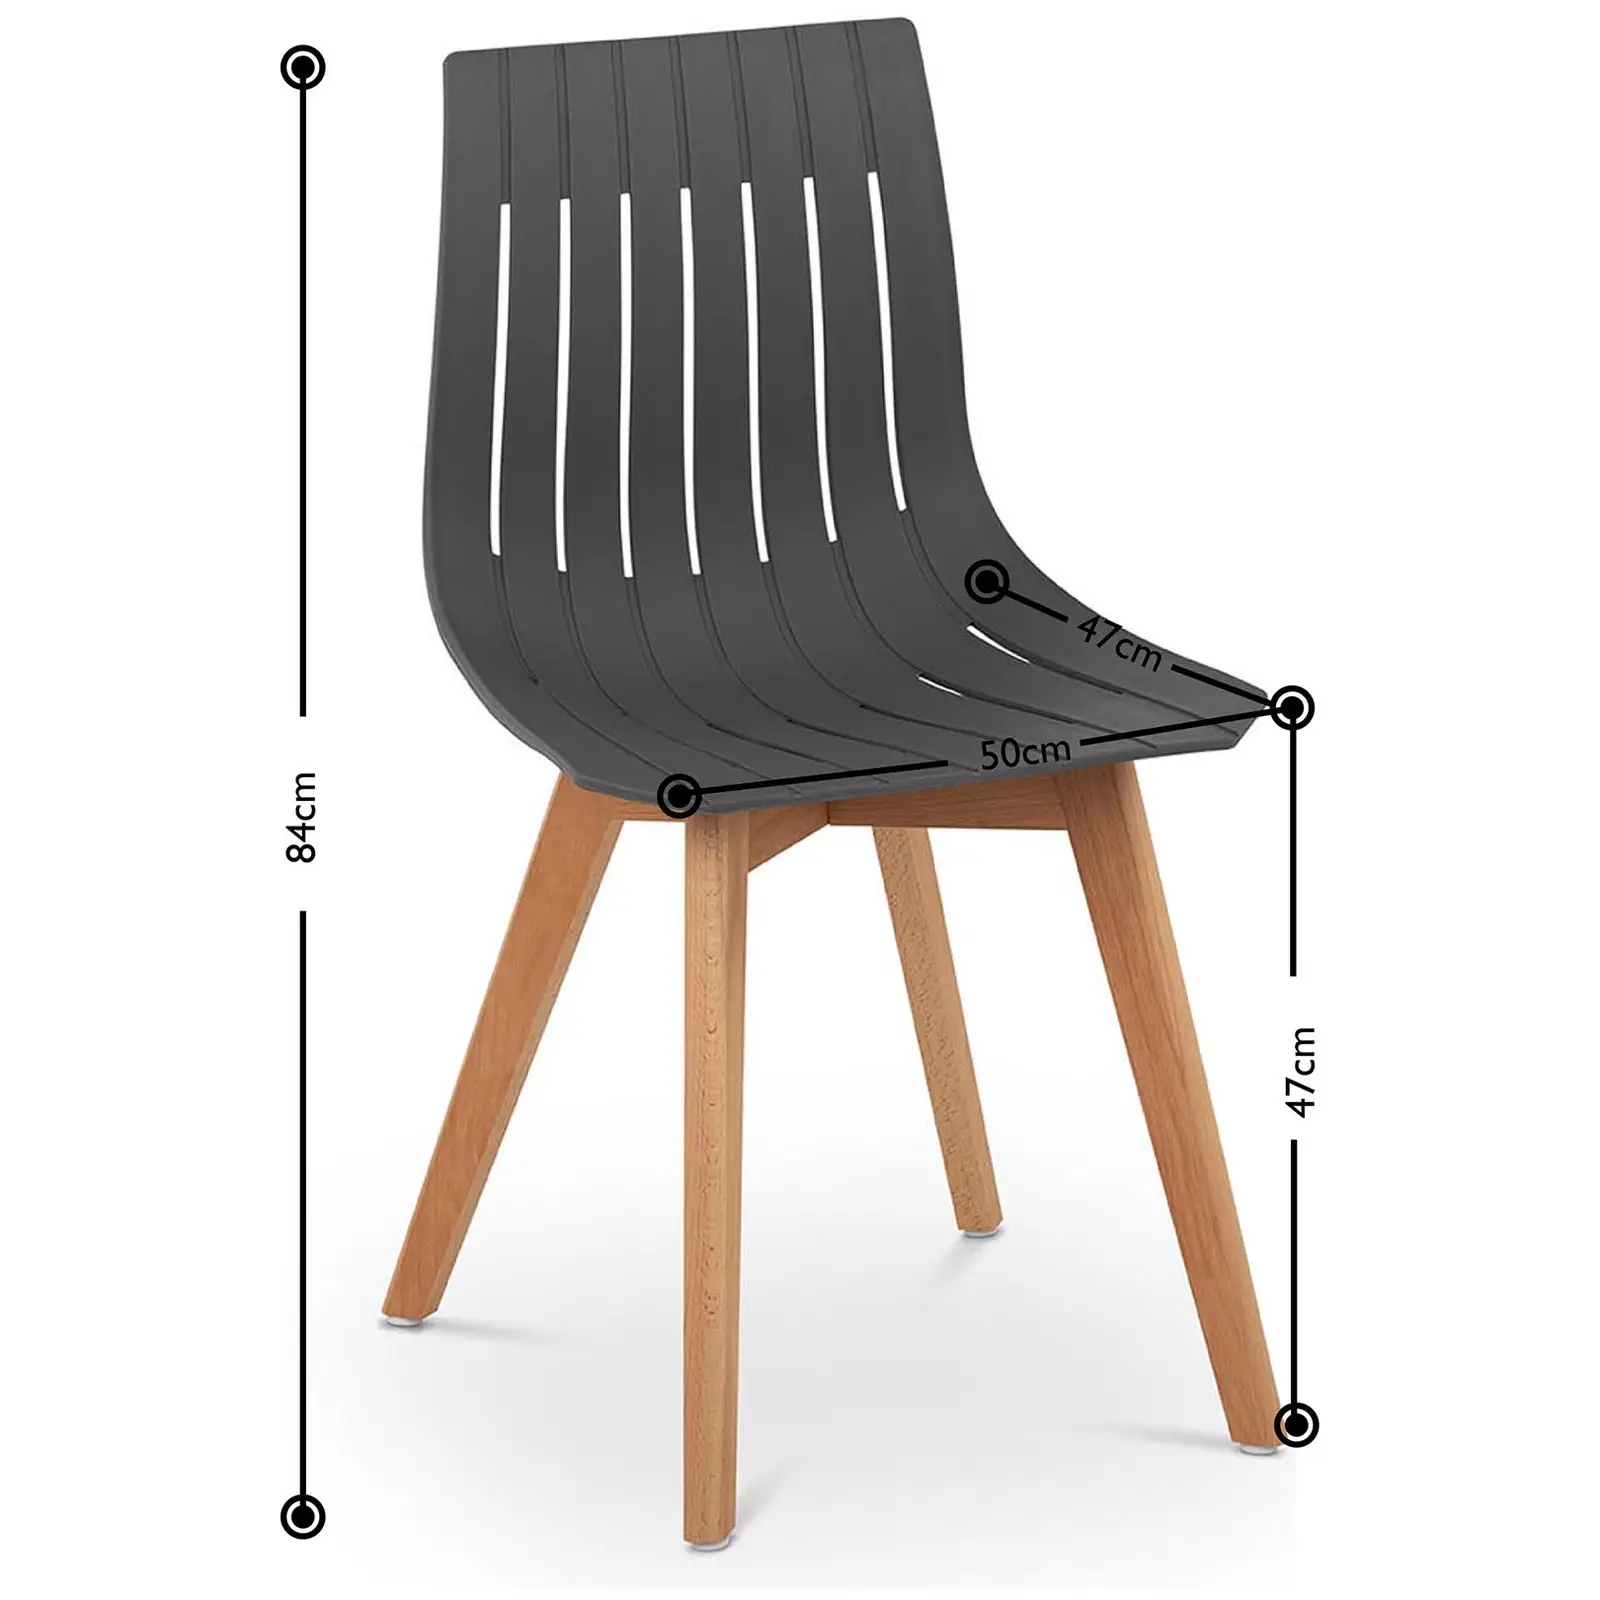 Židle - 2dílná sada - až 150 kg - sedák 50 x 47 cm - šedá